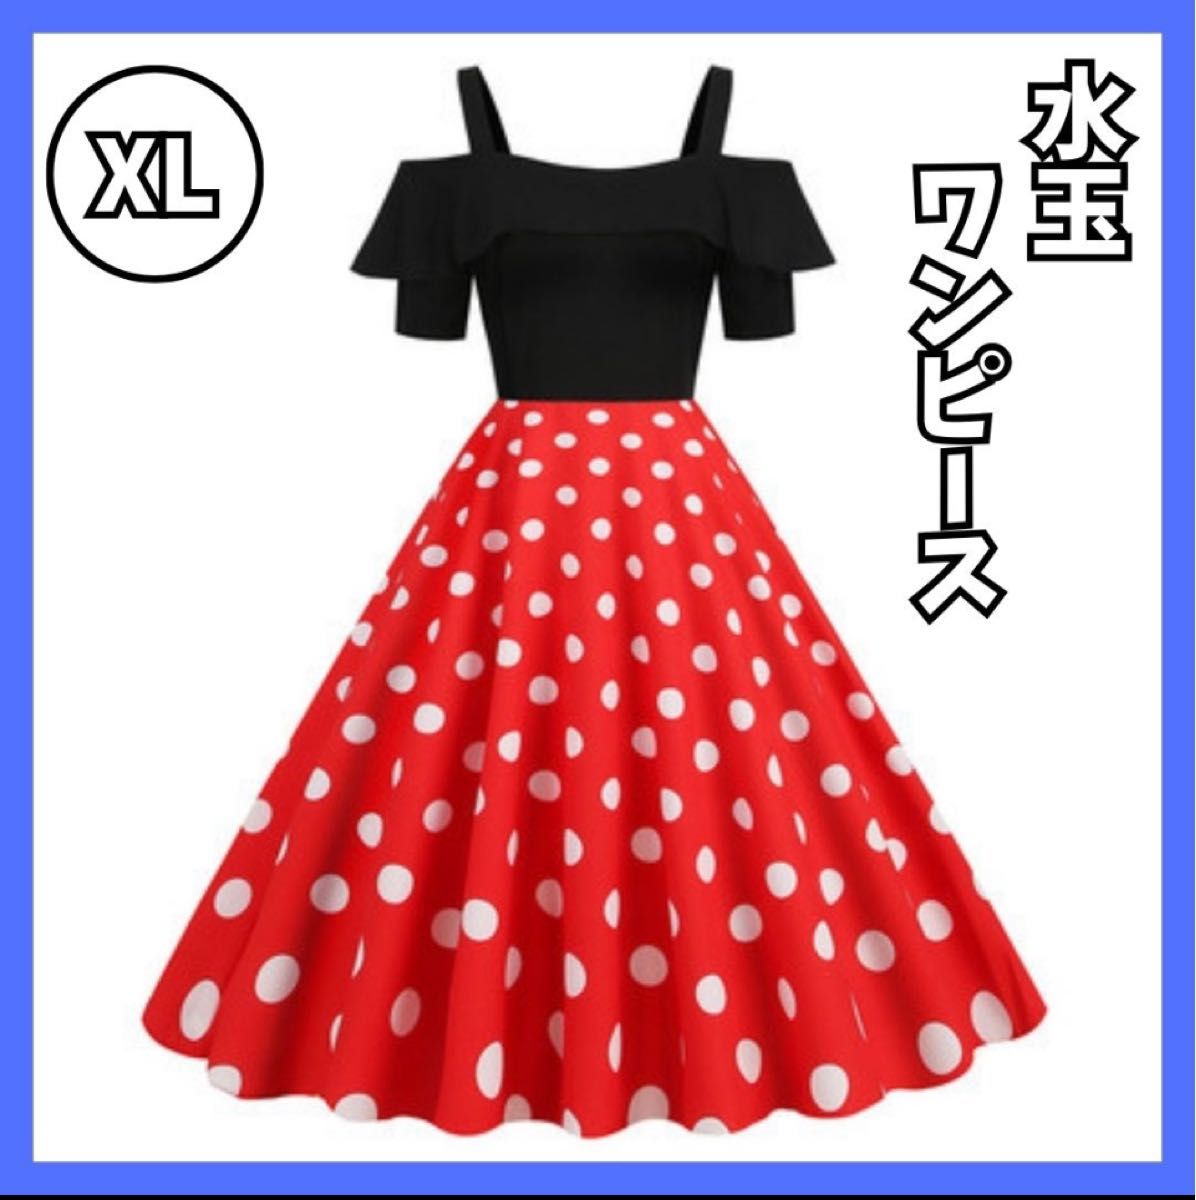 XLサイズ★ワンピース ドレス 赤 水玉 ドット ミニー風 コスプレ 大人可愛い